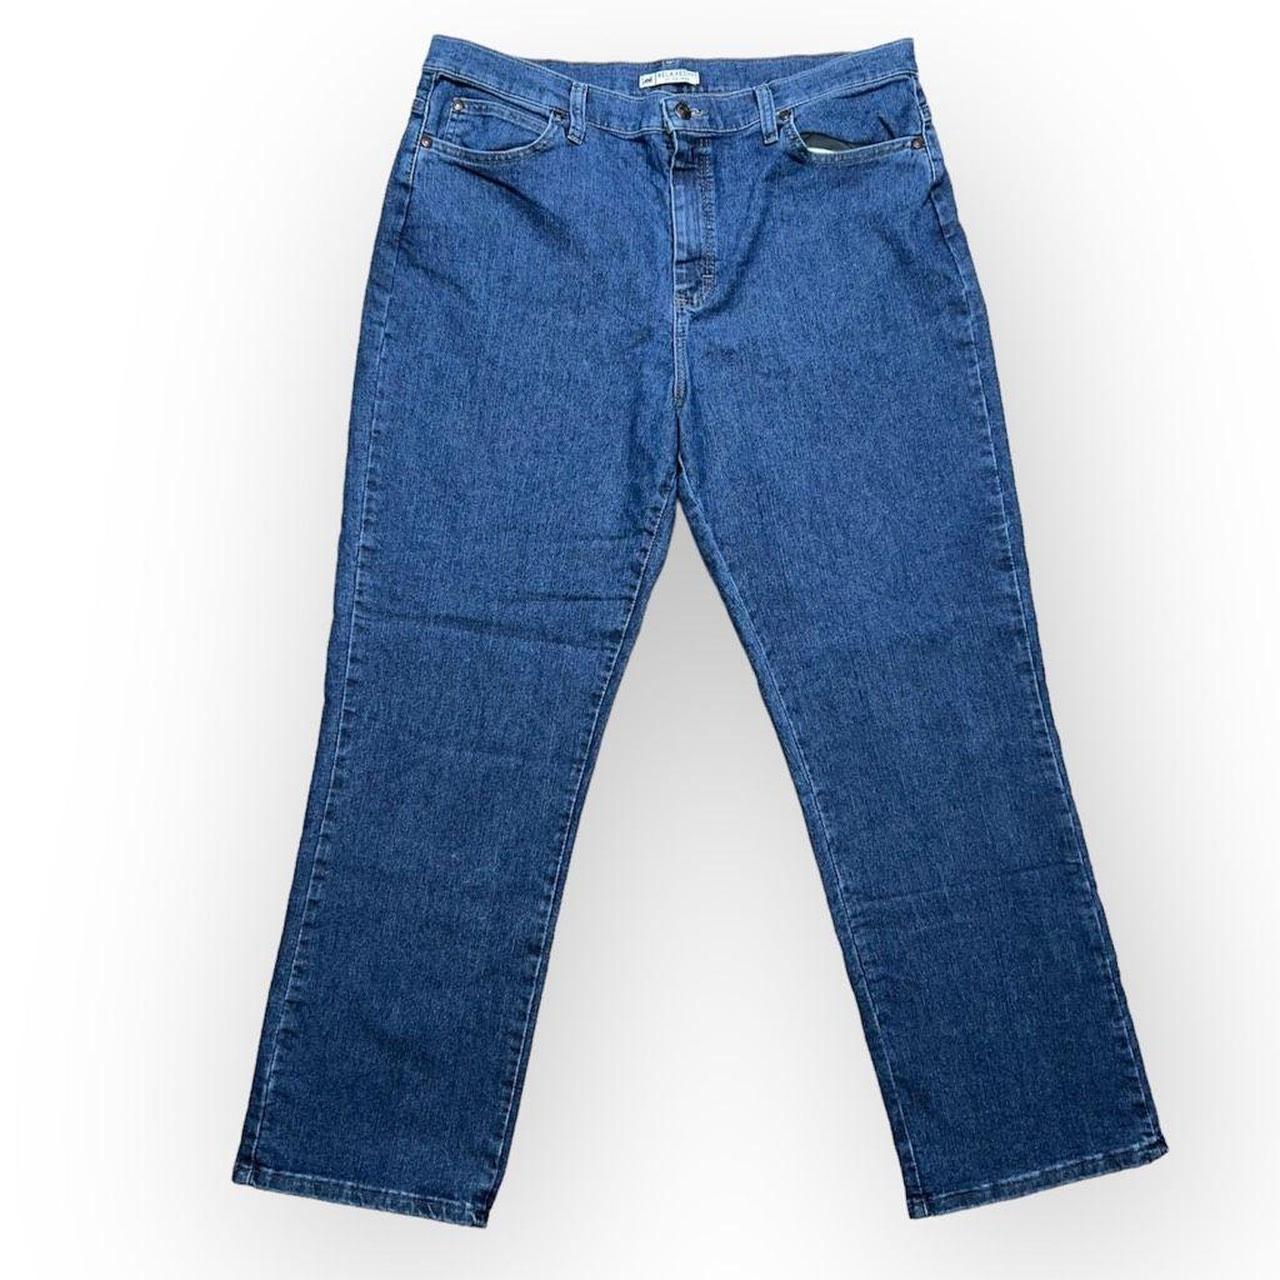 Flex magic waistband, high-rise skinny jeans by Lane - Depop